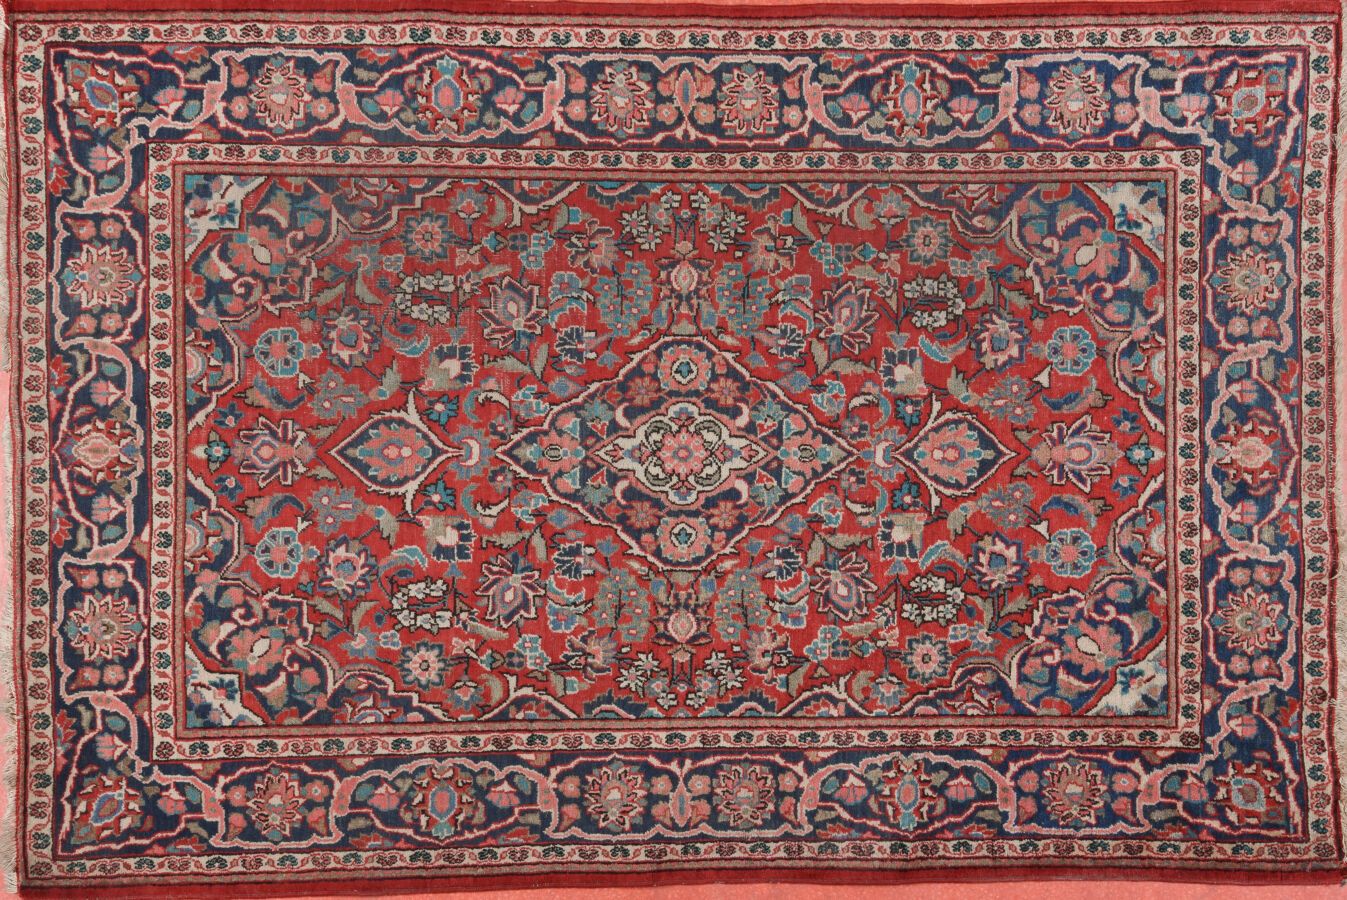 Null 波斯地毯。
棉绒羊毛经。
20世纪下半叶。
193厘米×131厘米。 
磨损和撕裂。